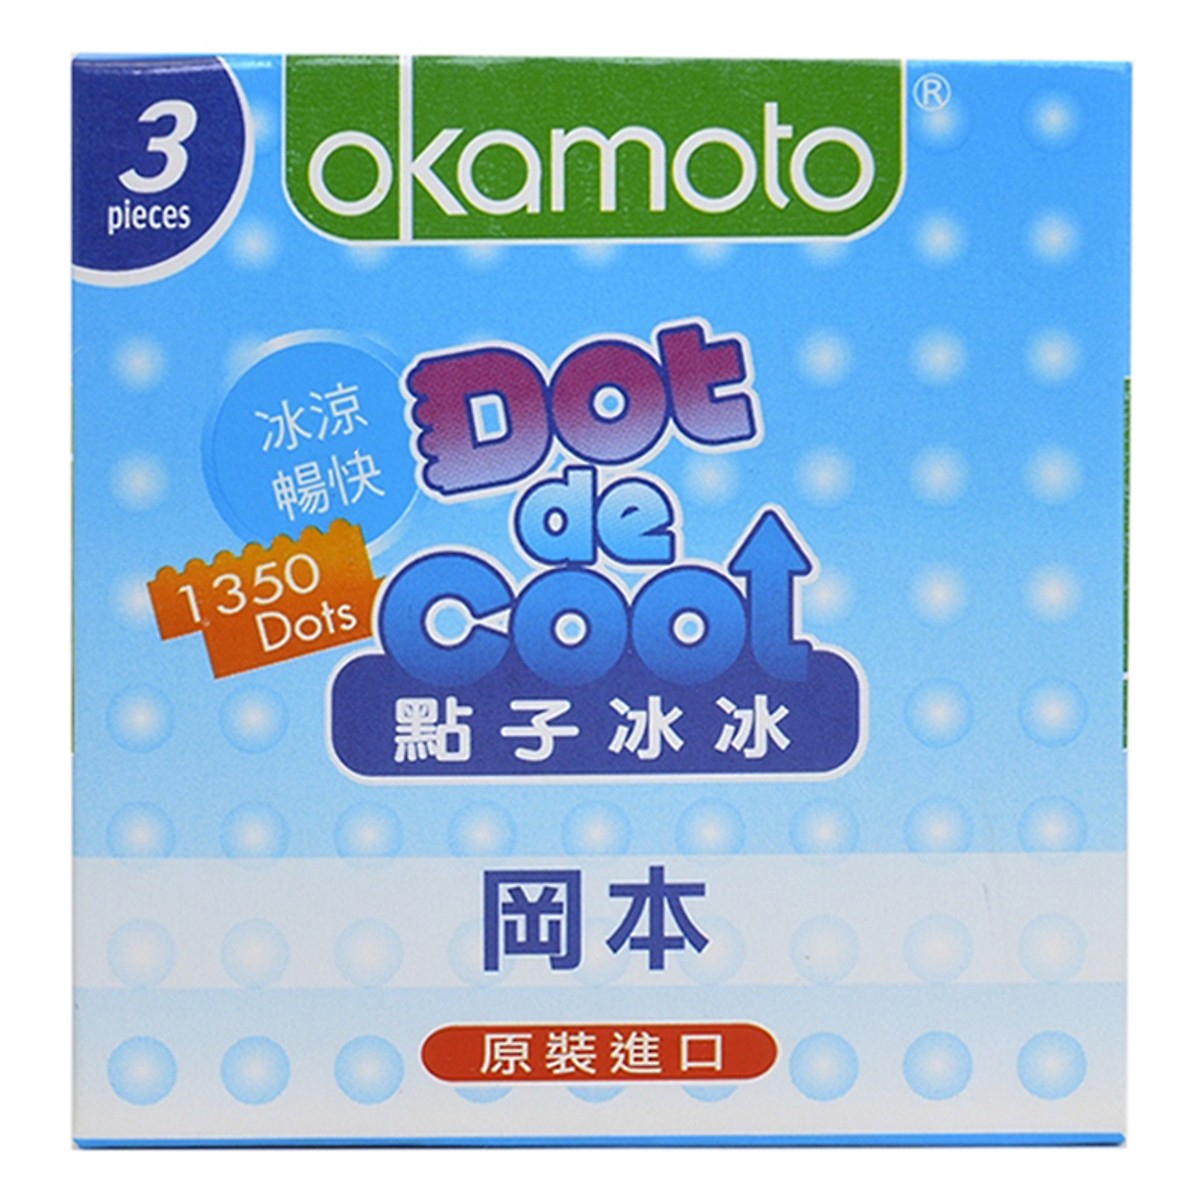 Bao Cao Su Okamoto Dot Cool, Hộp 3 Cái